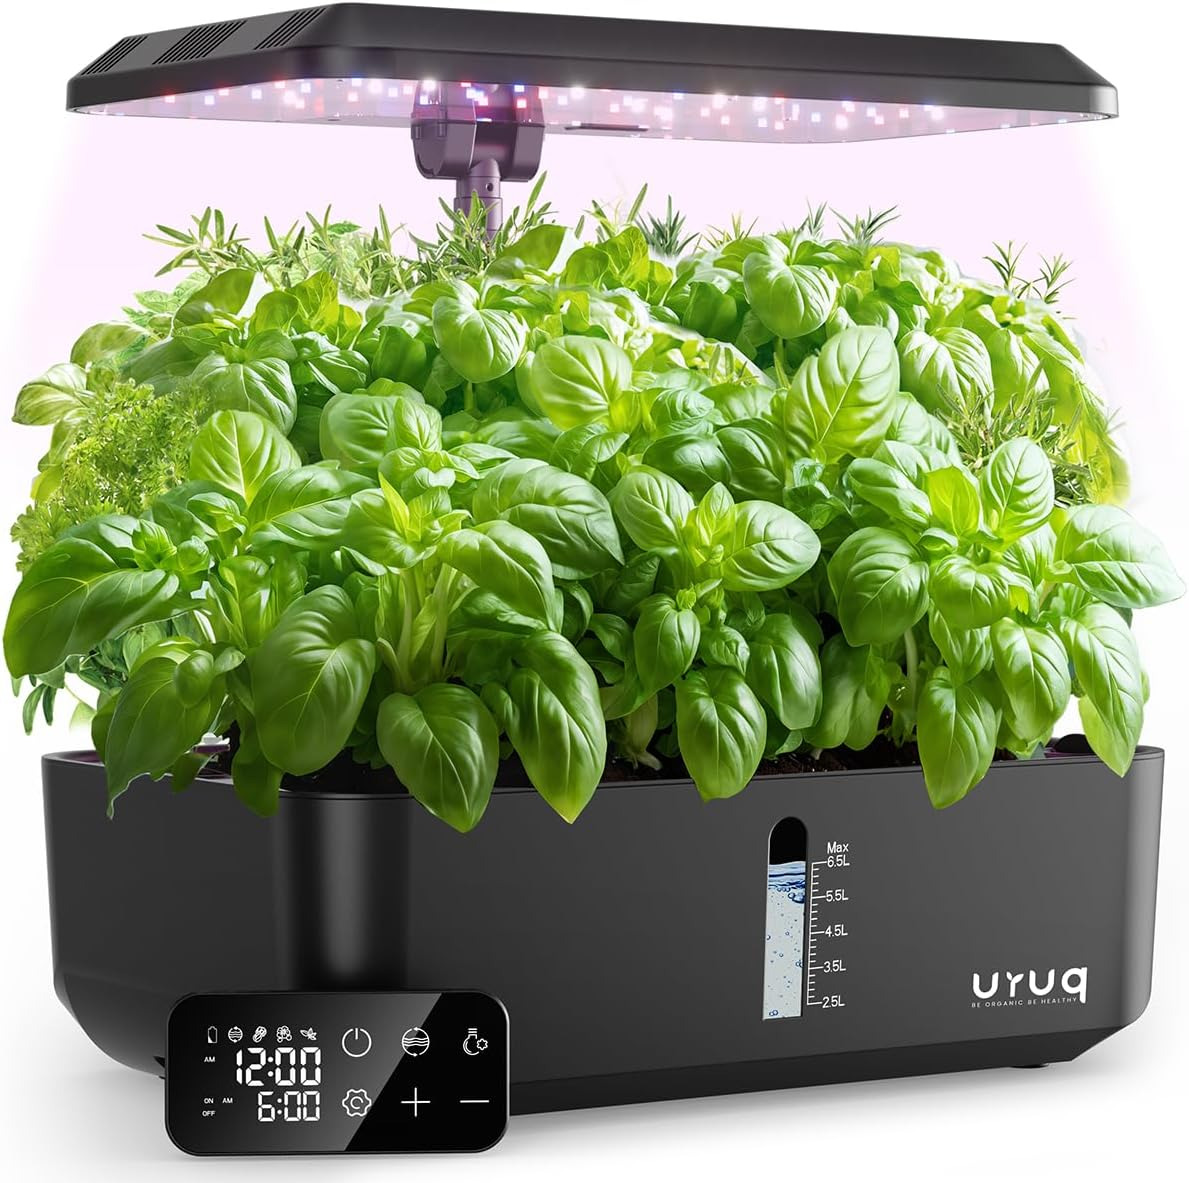 Hydroponics Growing System Indoor Garden: URUQ 12 Pods Indoor Gardening System w